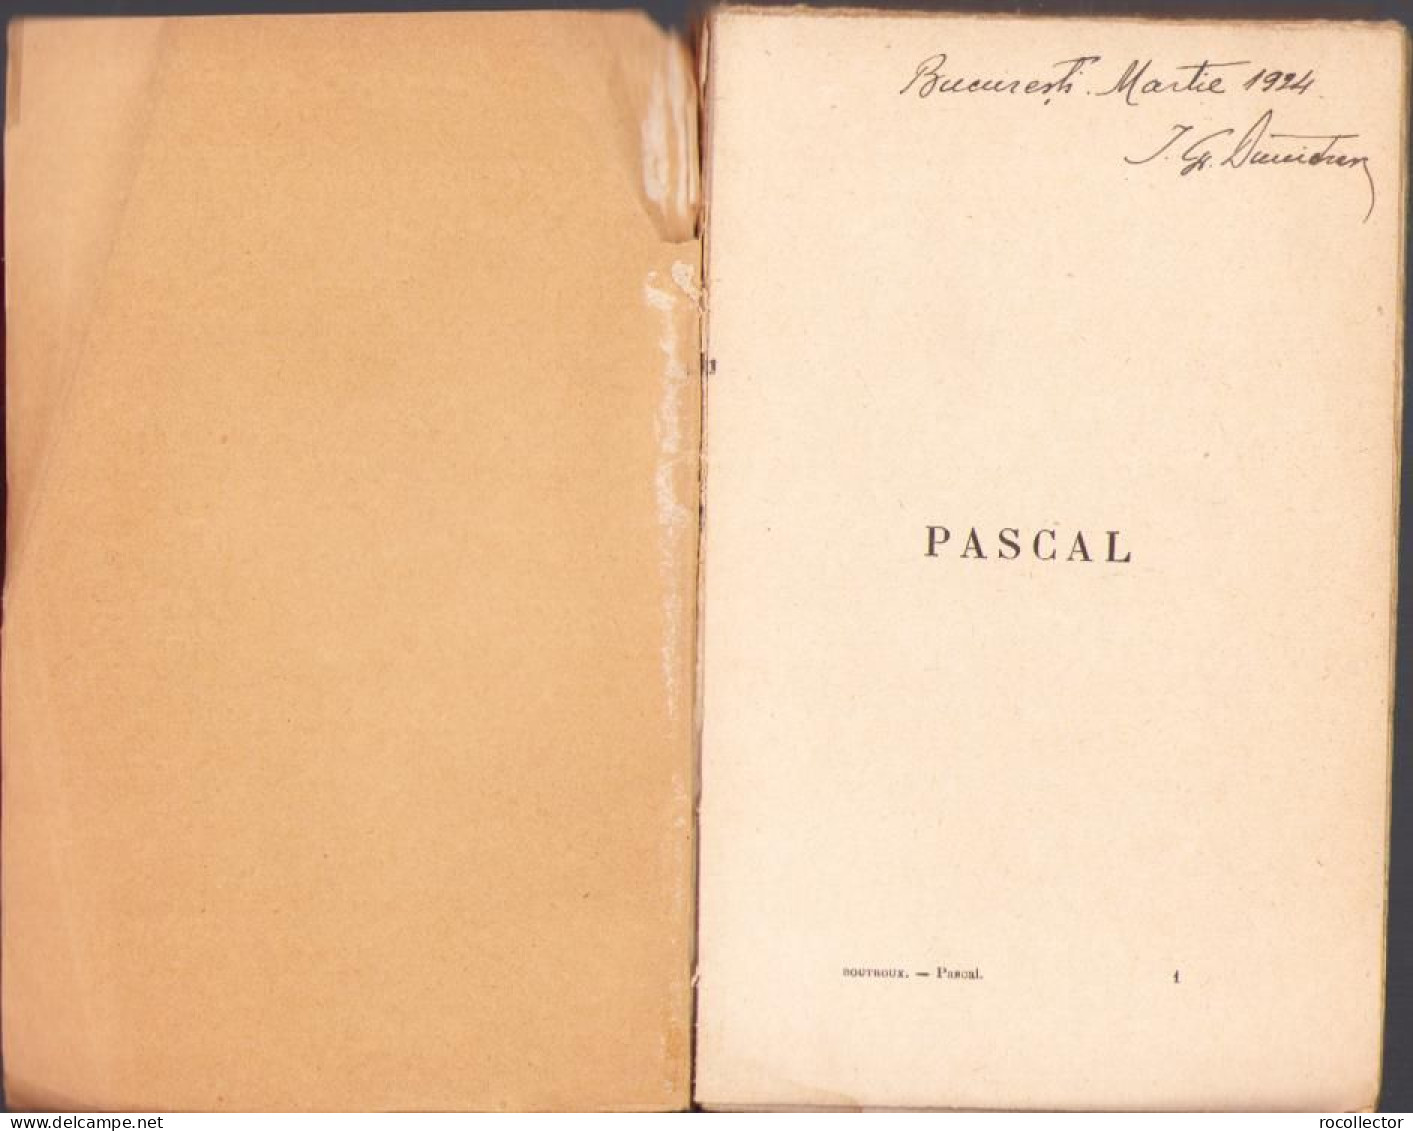 Pascal Par Emile Boutroux, 1924 C1705 - Libri Vecchi E Da Collezione